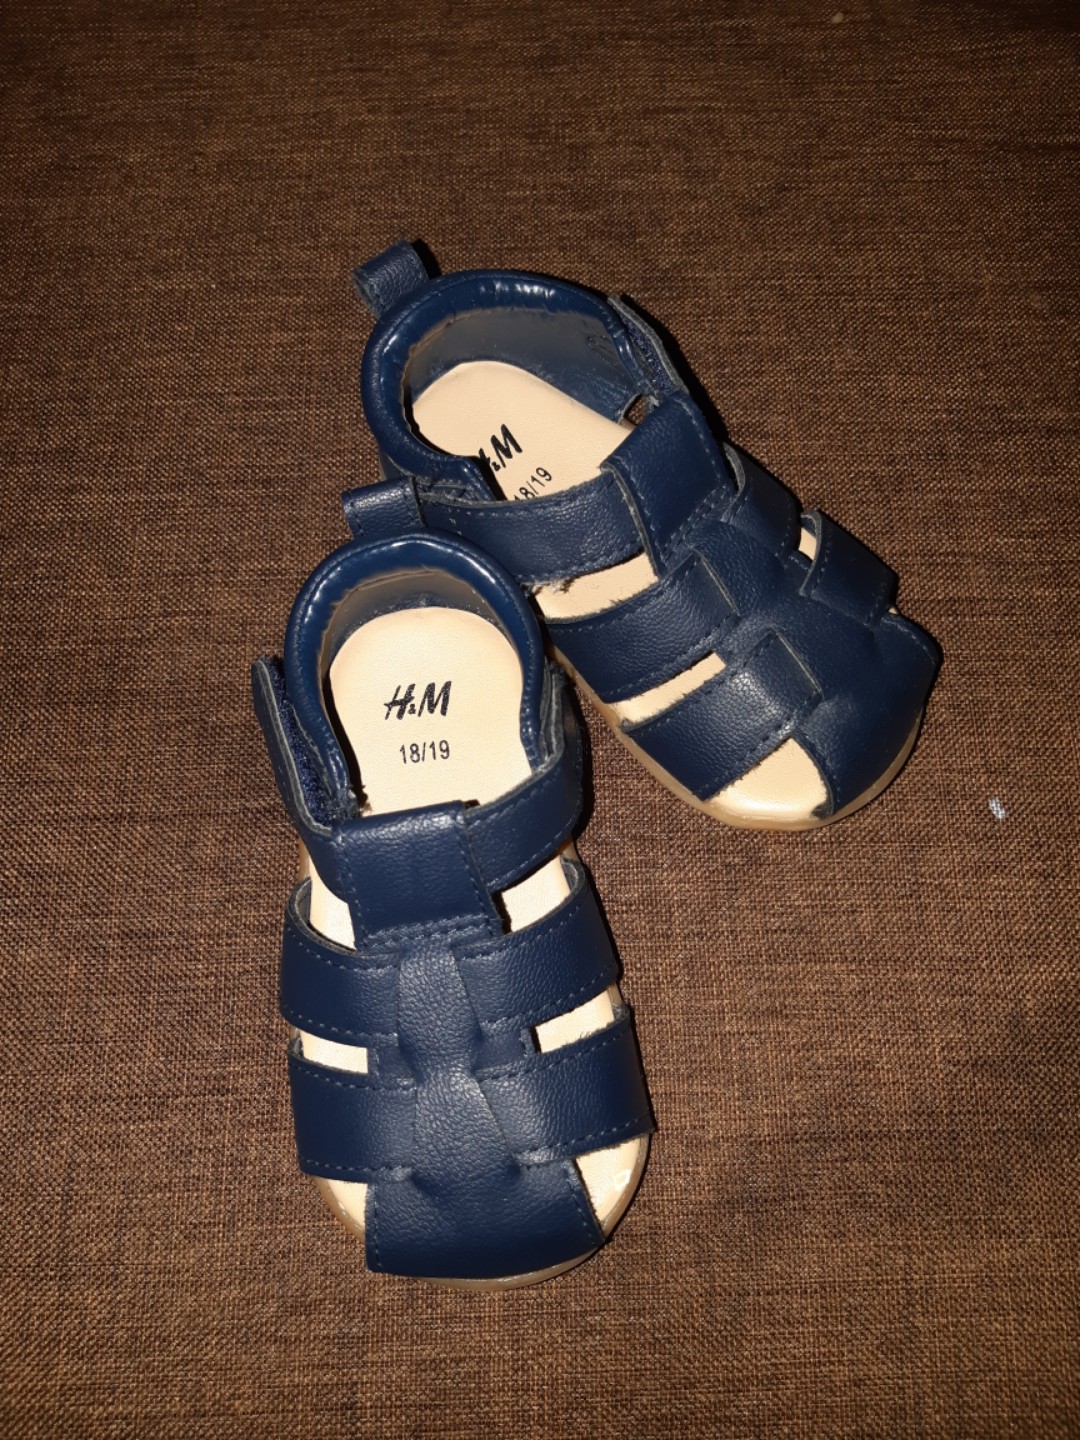 h&m baby sandals